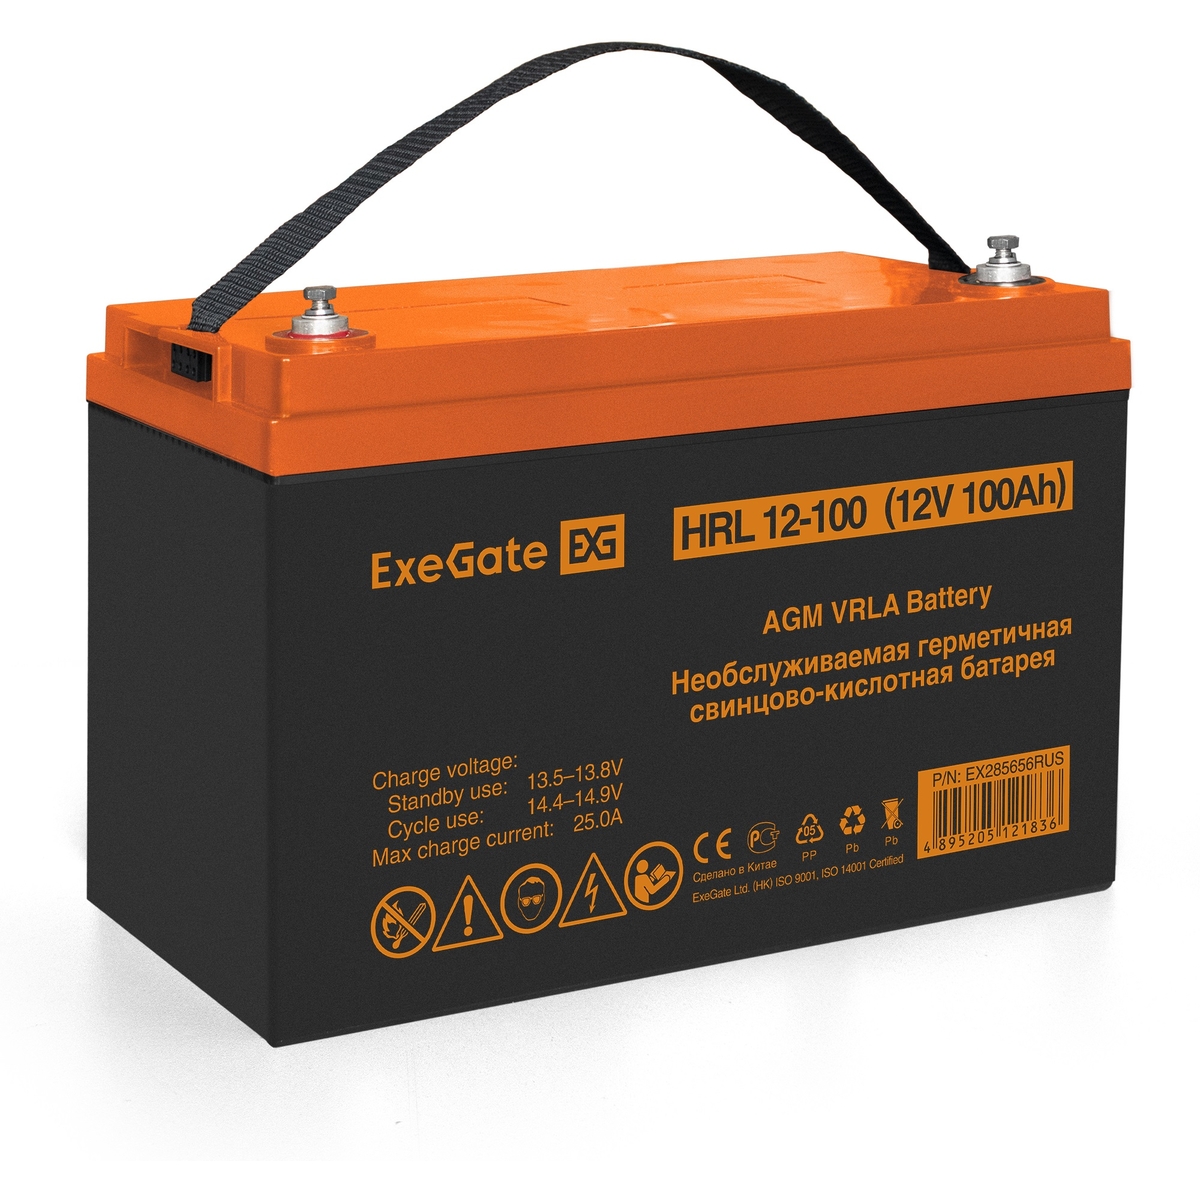 UPS set EX295995 + battery 100Ah EX285656 1 piece